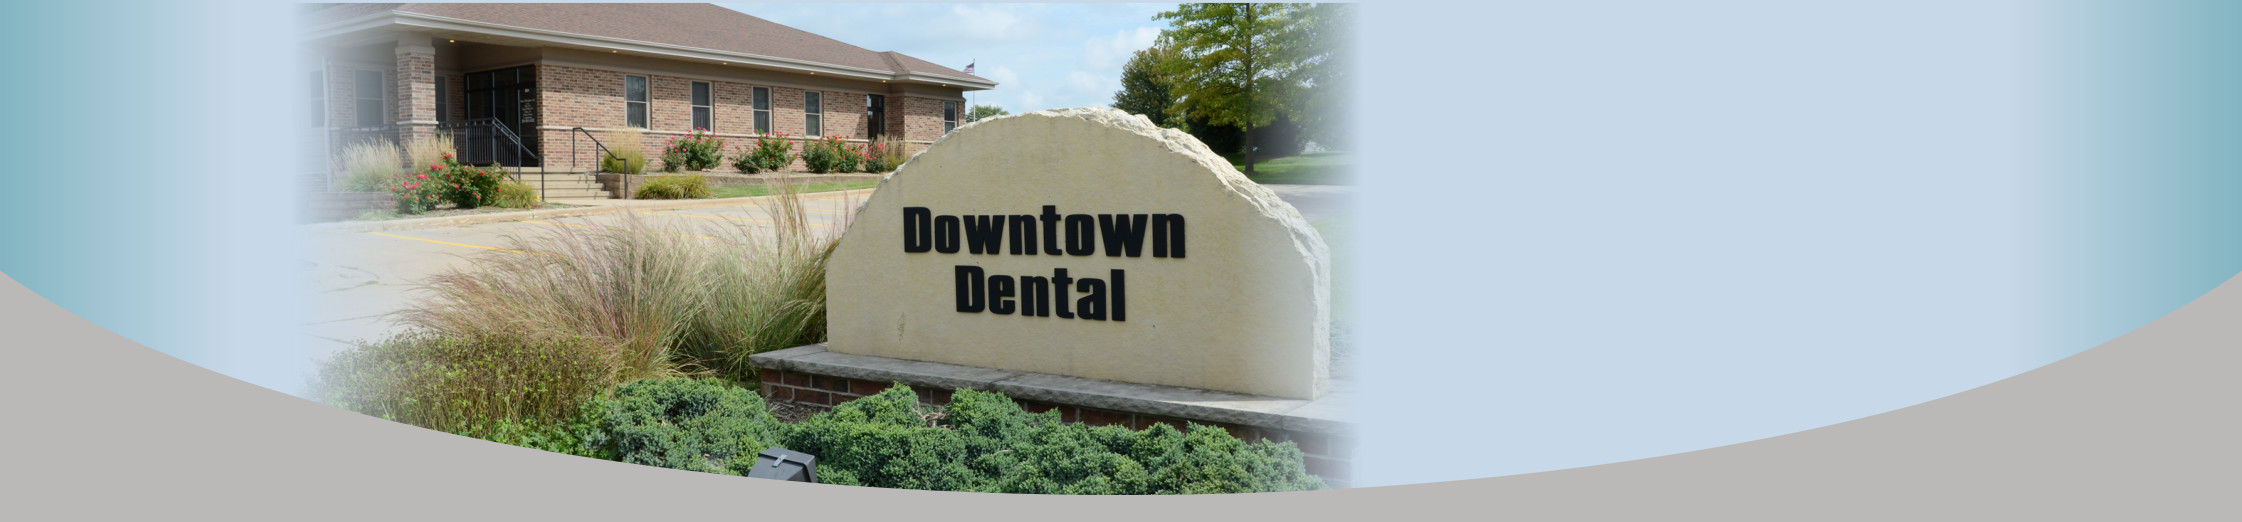 downtown dental inc, general dentistry